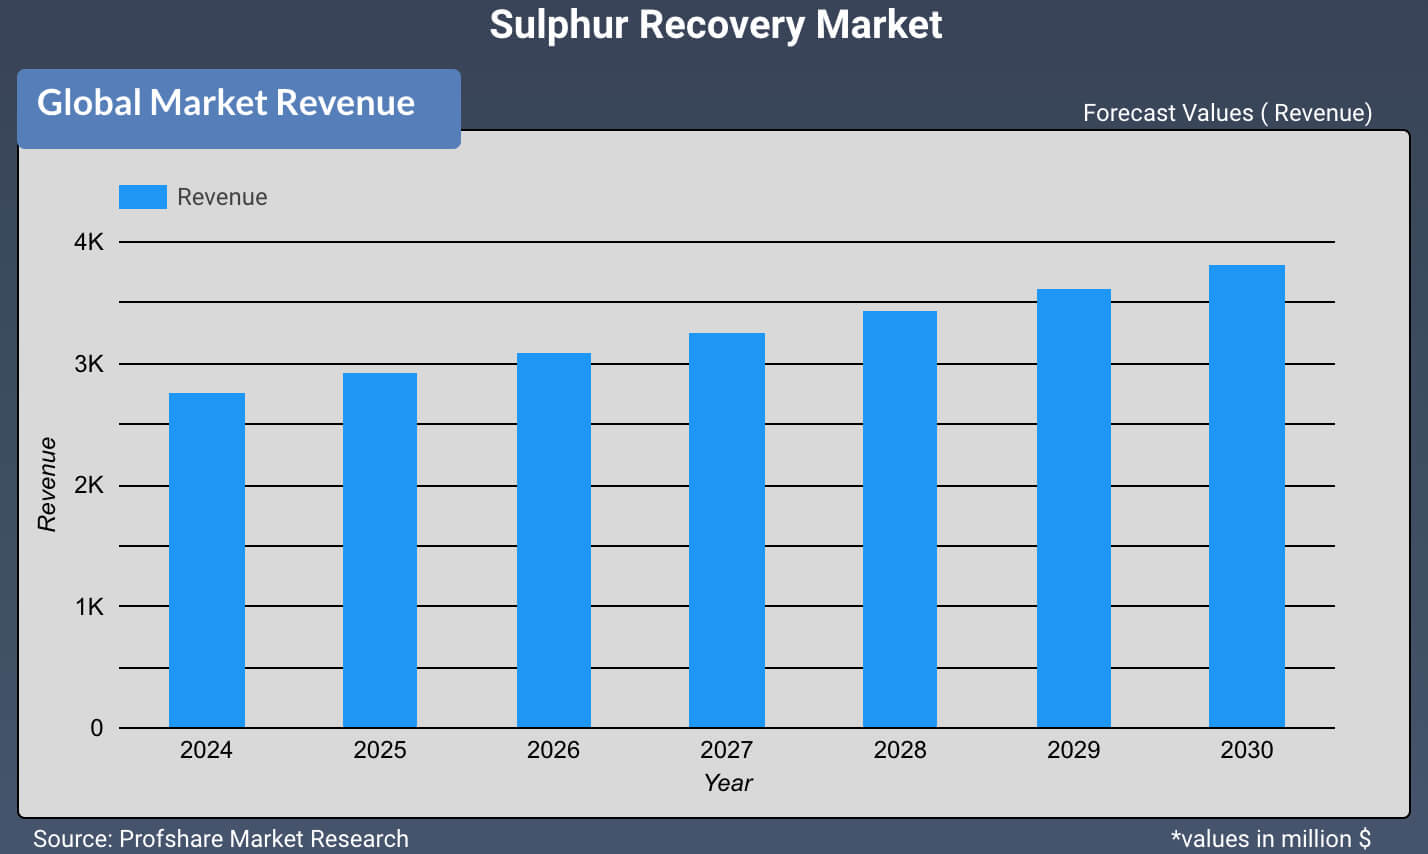 Sulphur Recovery Market